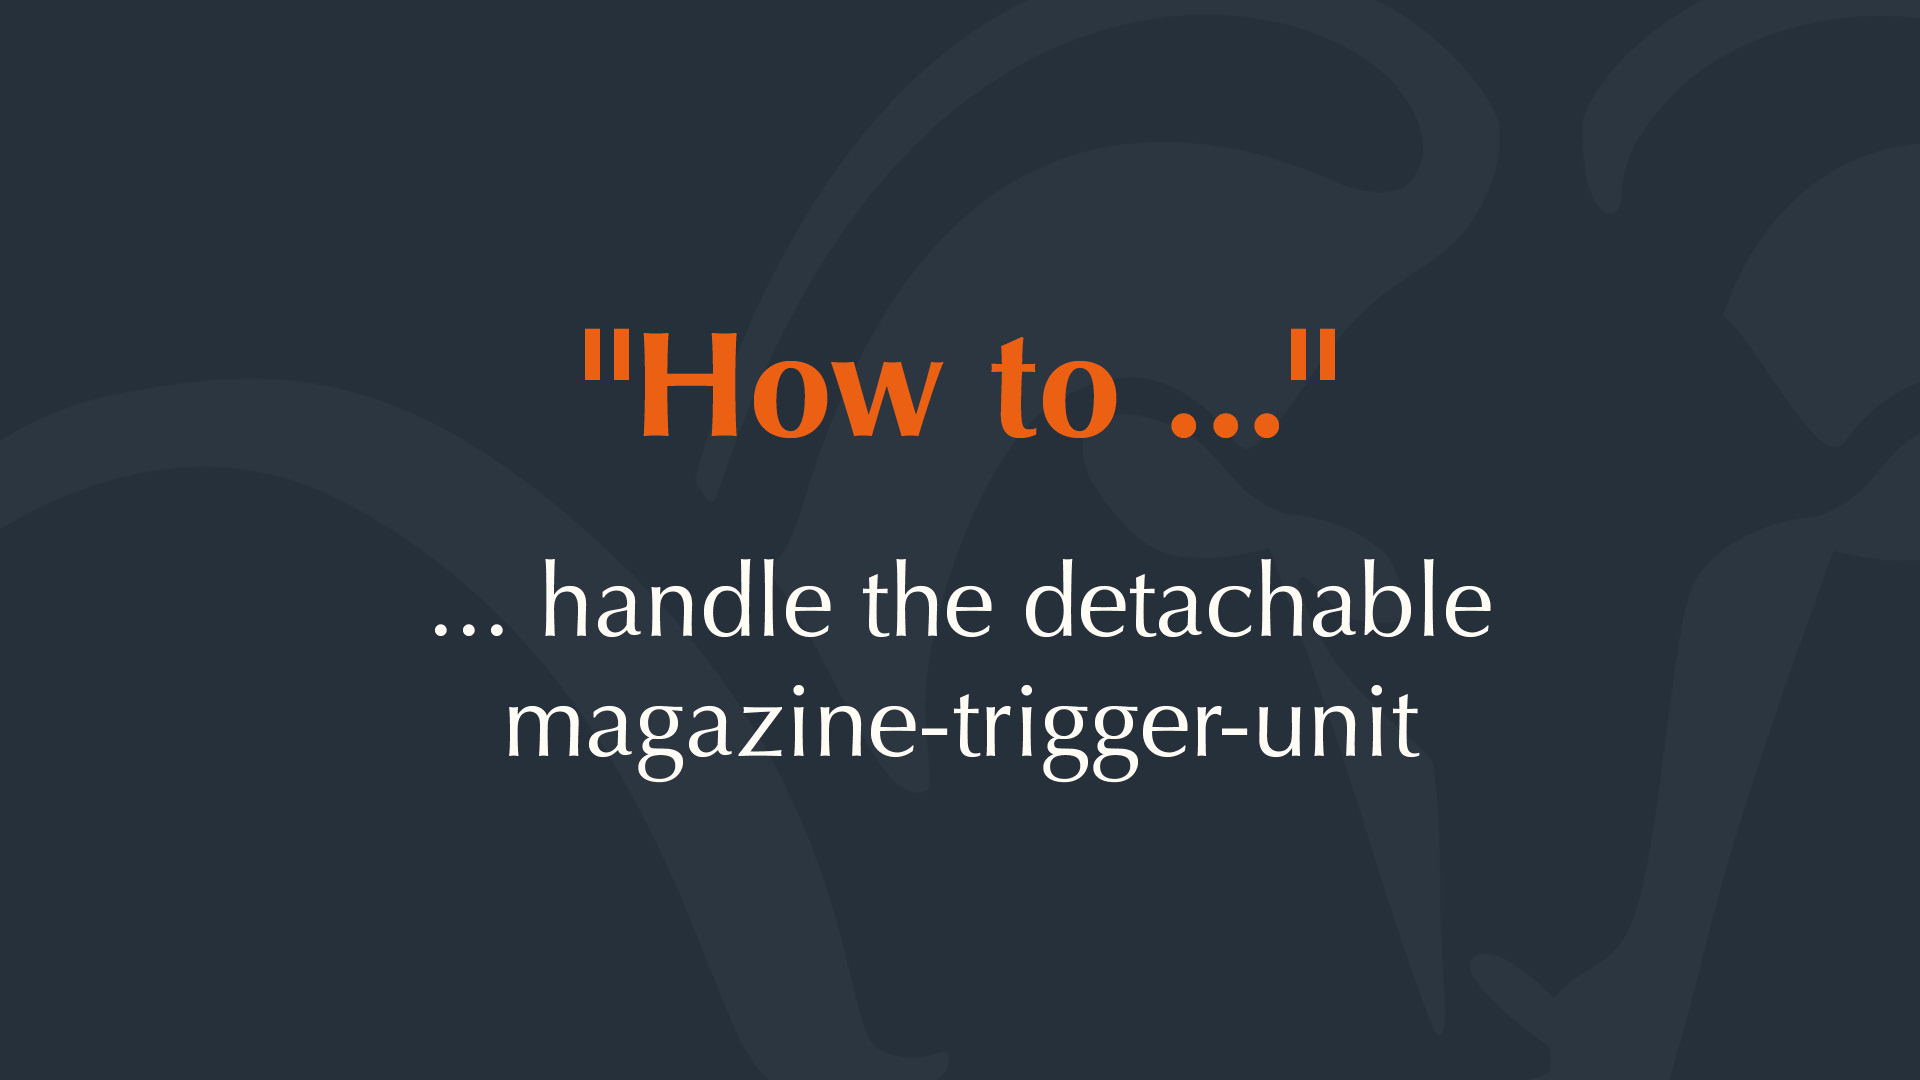 How to ... handle the detachable magazine